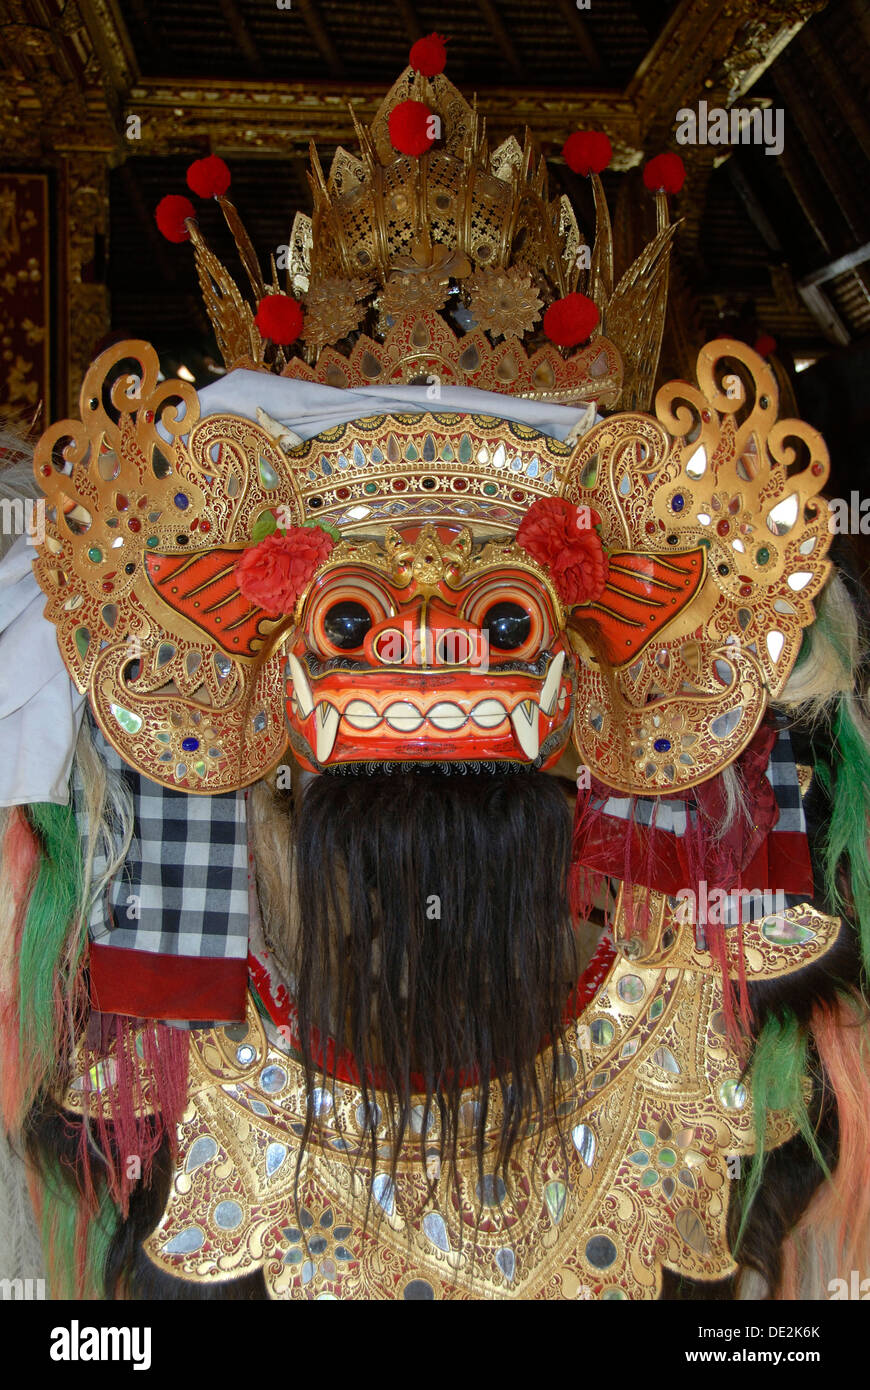 Arts and culture, Barong mask, mystical mythical creature, Ubud, Bali, Indonesia, Southeast Asia, Asia Stock Photo